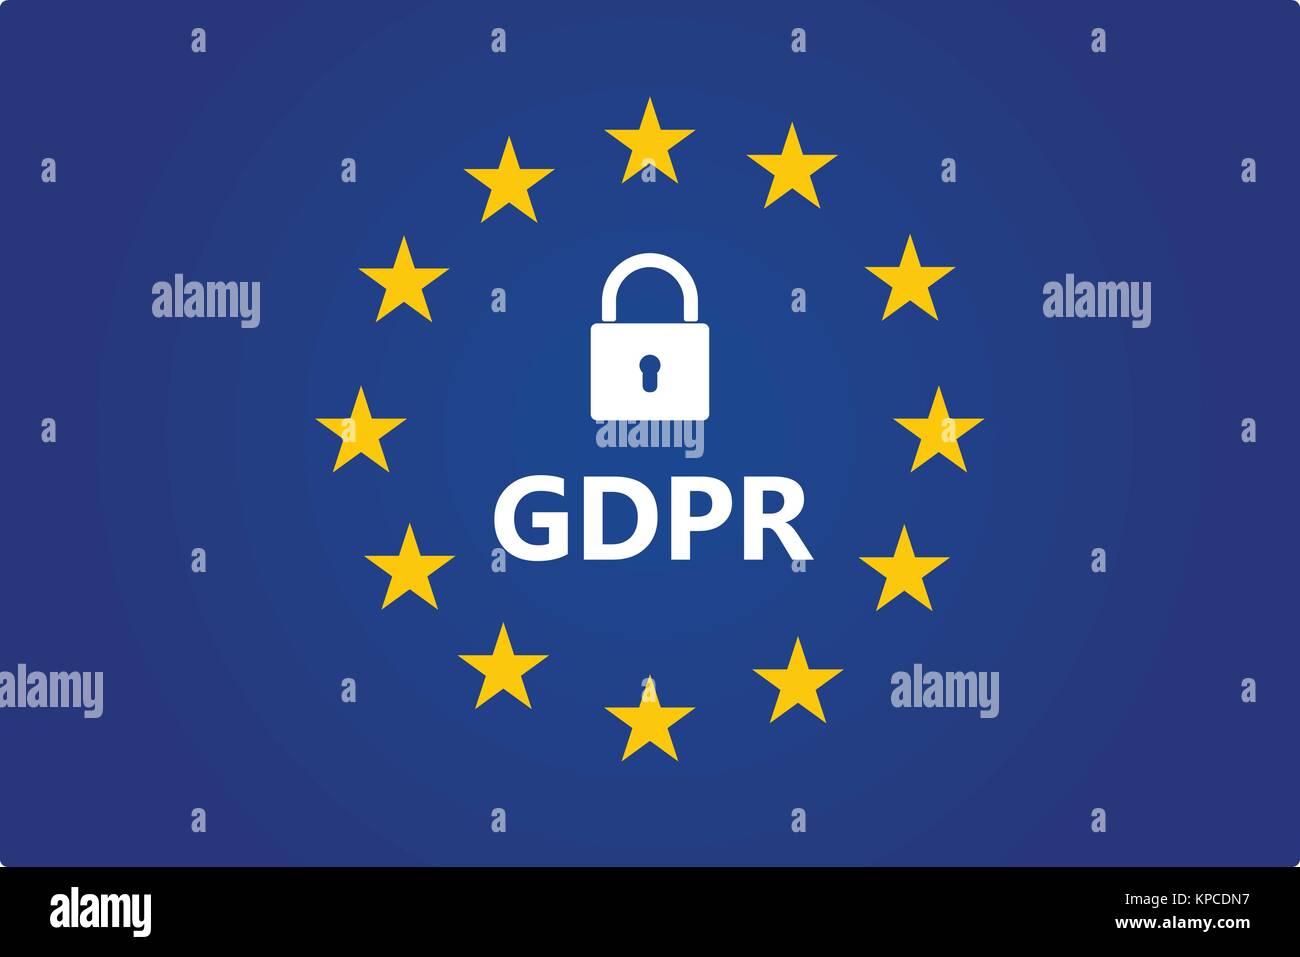 GDPR - European General Data Protection Regulation. Stock Vector